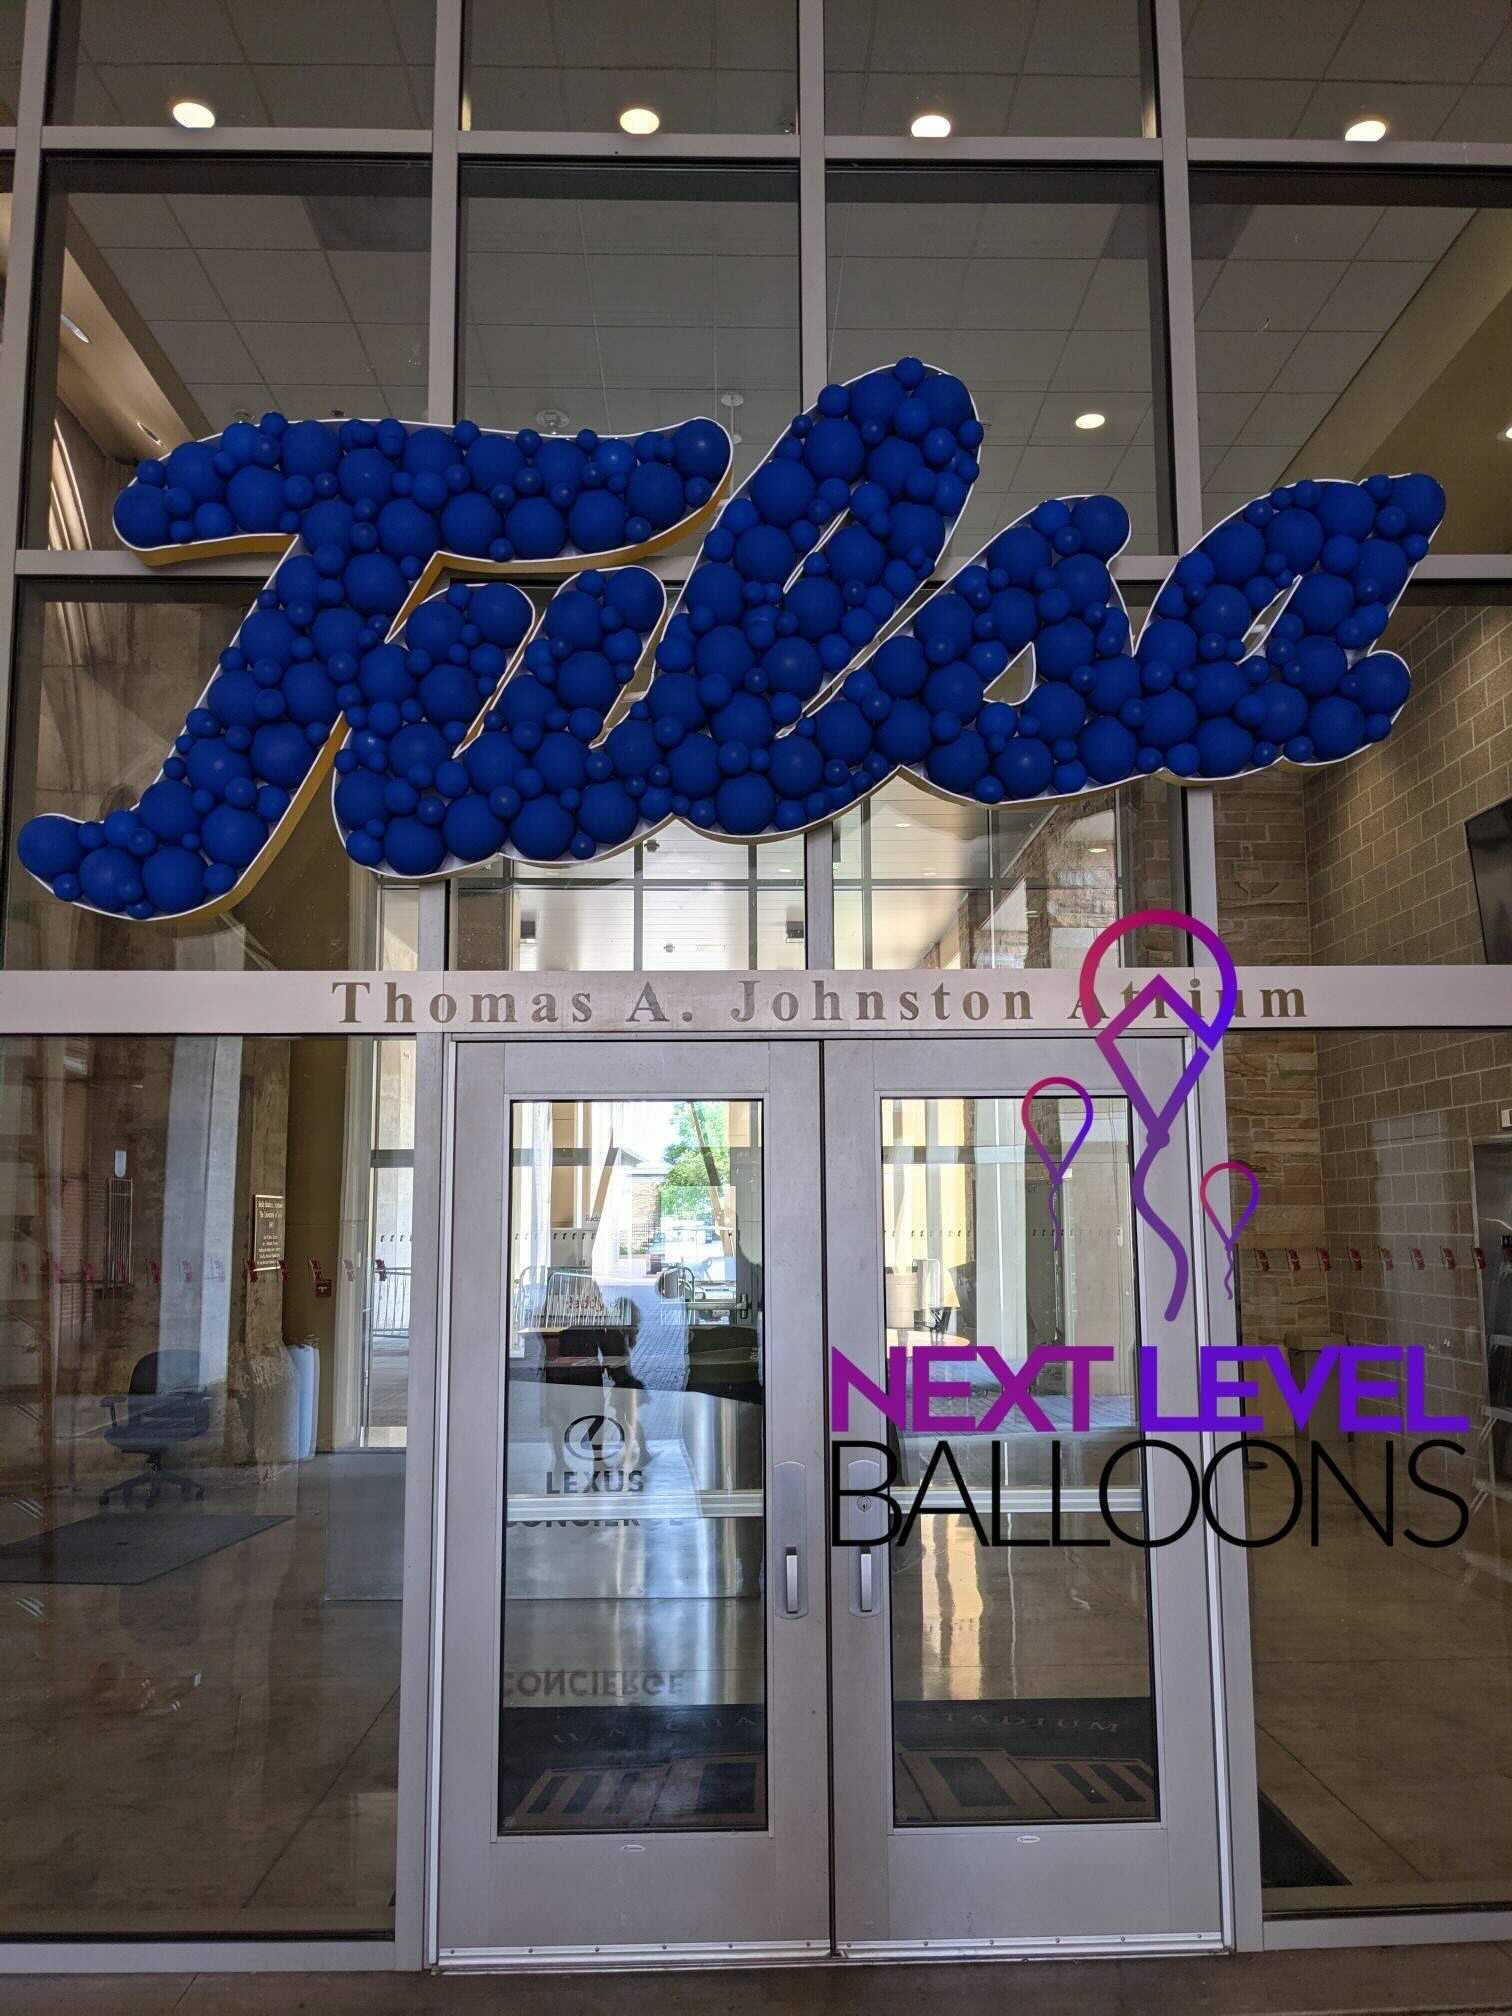 Balloon Art done for Univeristy of Tulsa Golden Hurricanes football team sponsorshp